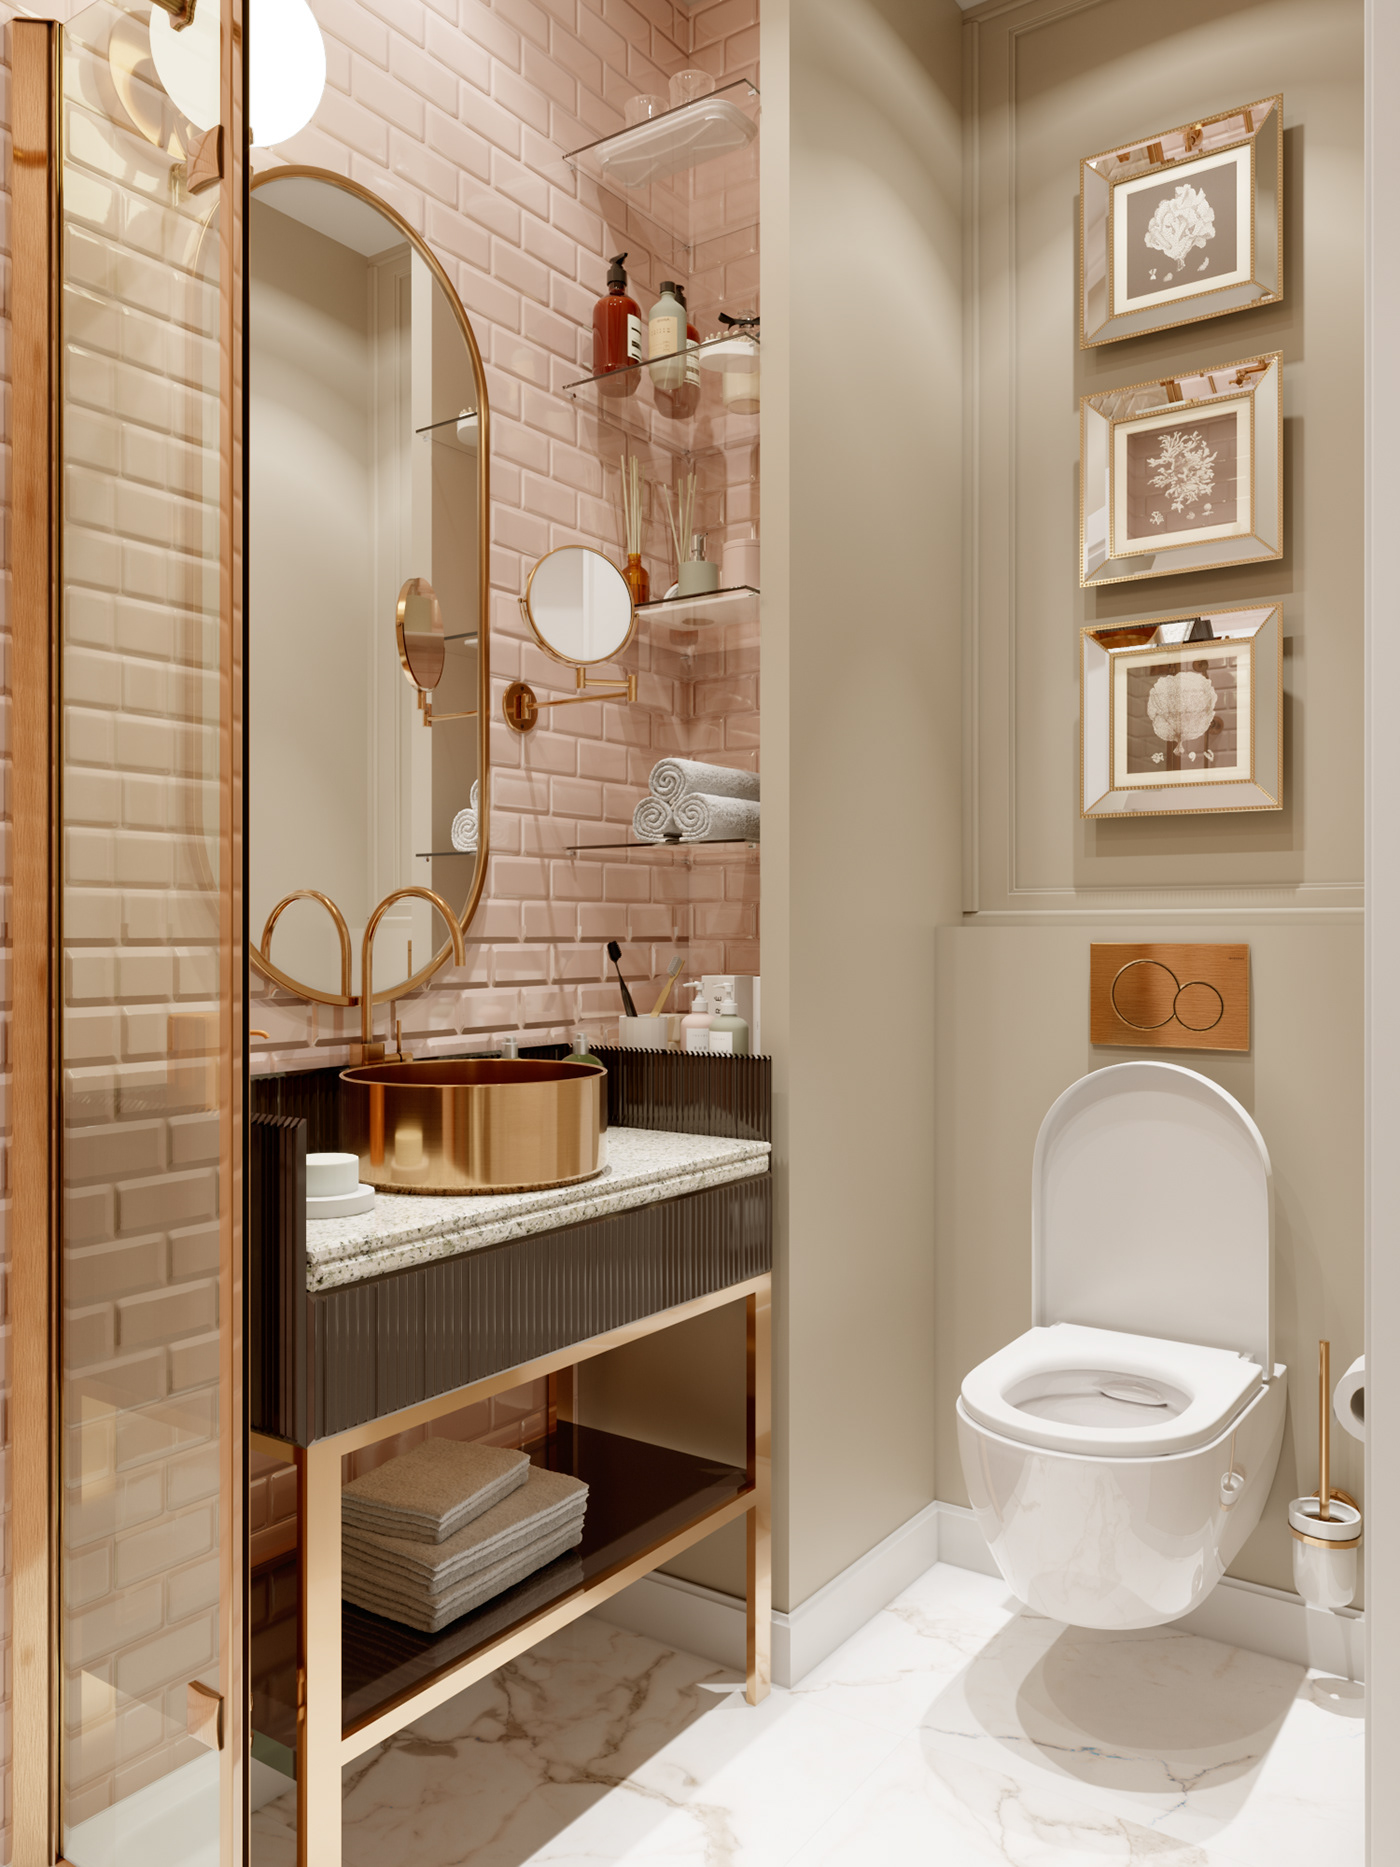 bedroom kitchen bathroom Interior design Russia 3D Render interior design  Rg Design